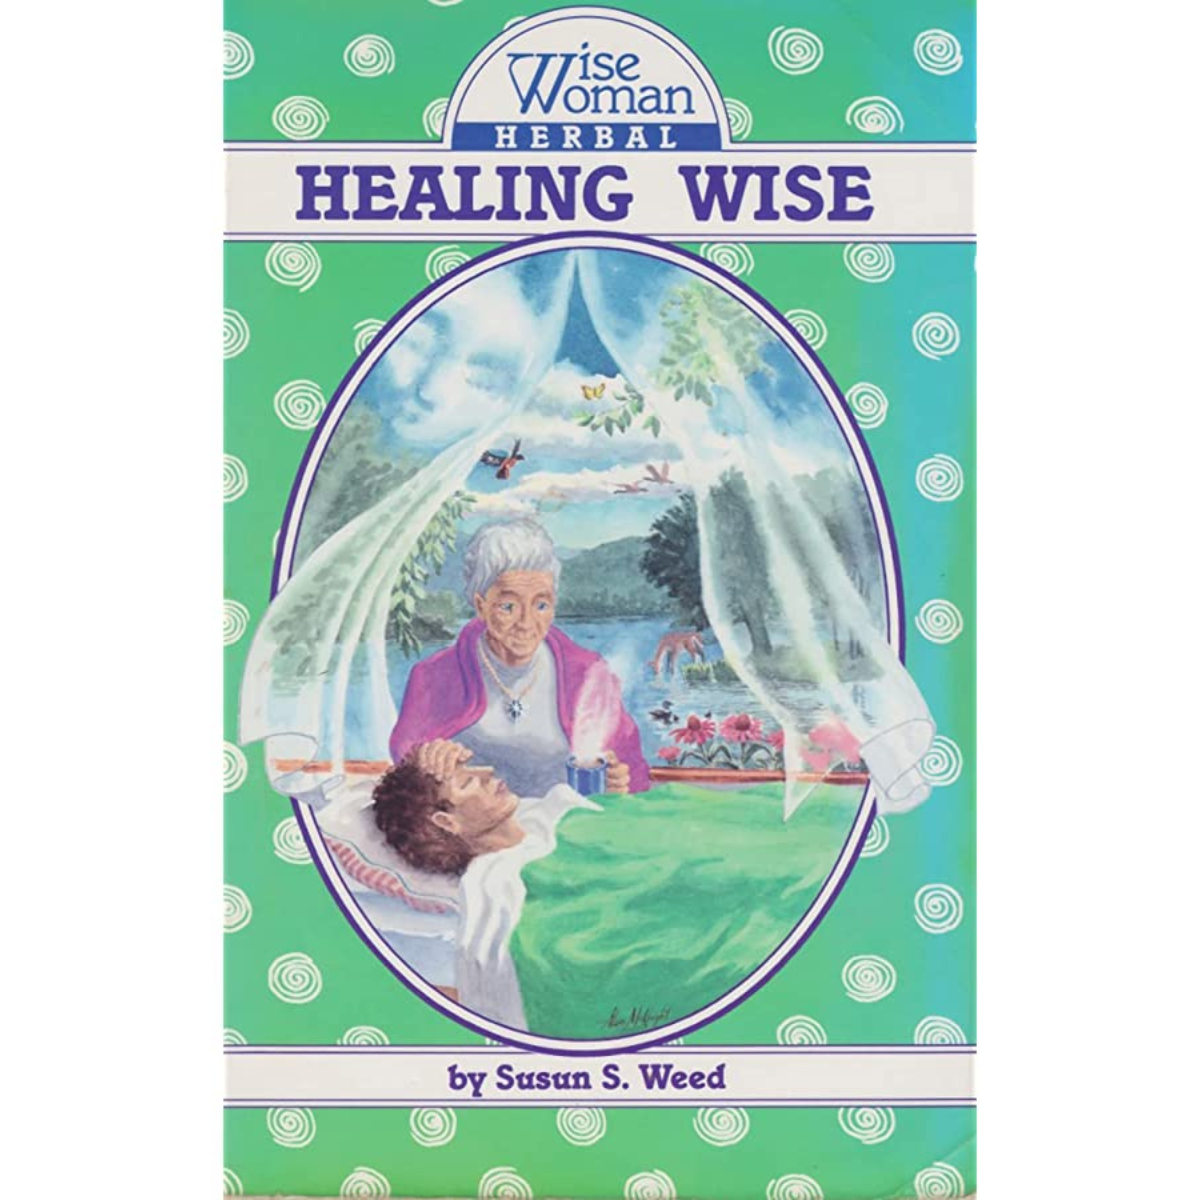 Healing Wise, Wise Woman Herbal